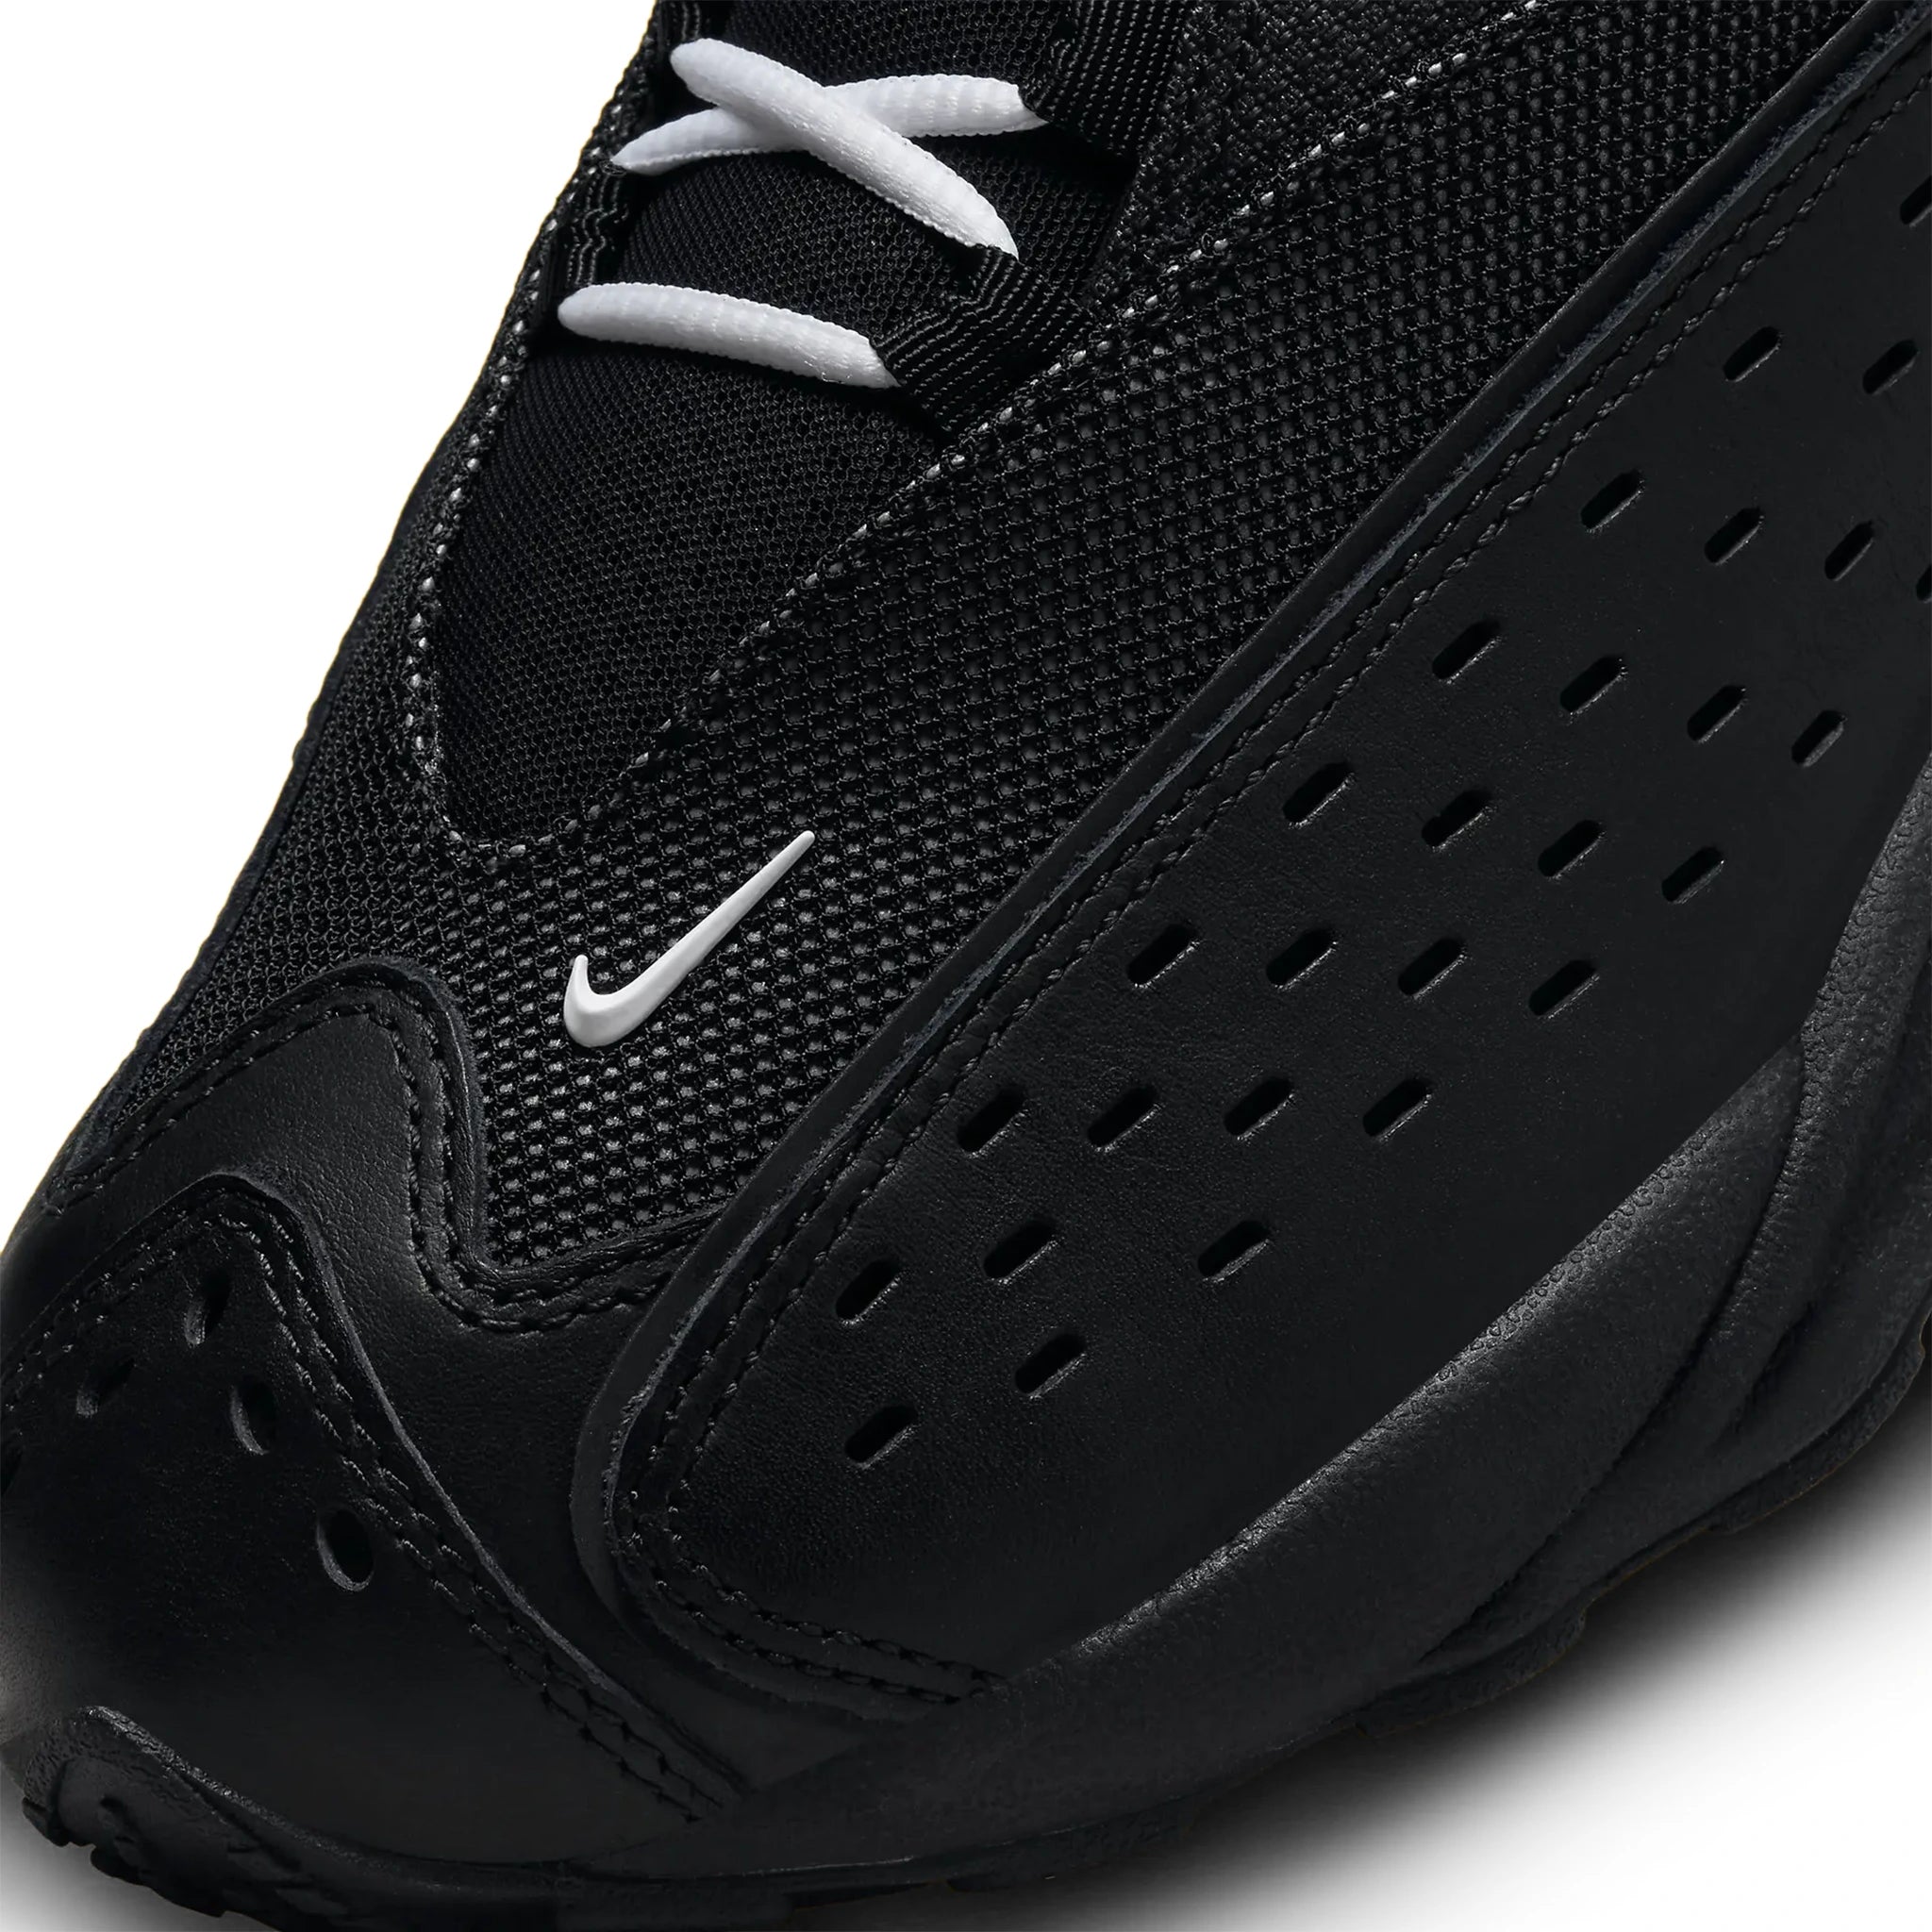 Toe box view of Nike x NOCTA Air Zoom Drive Black White